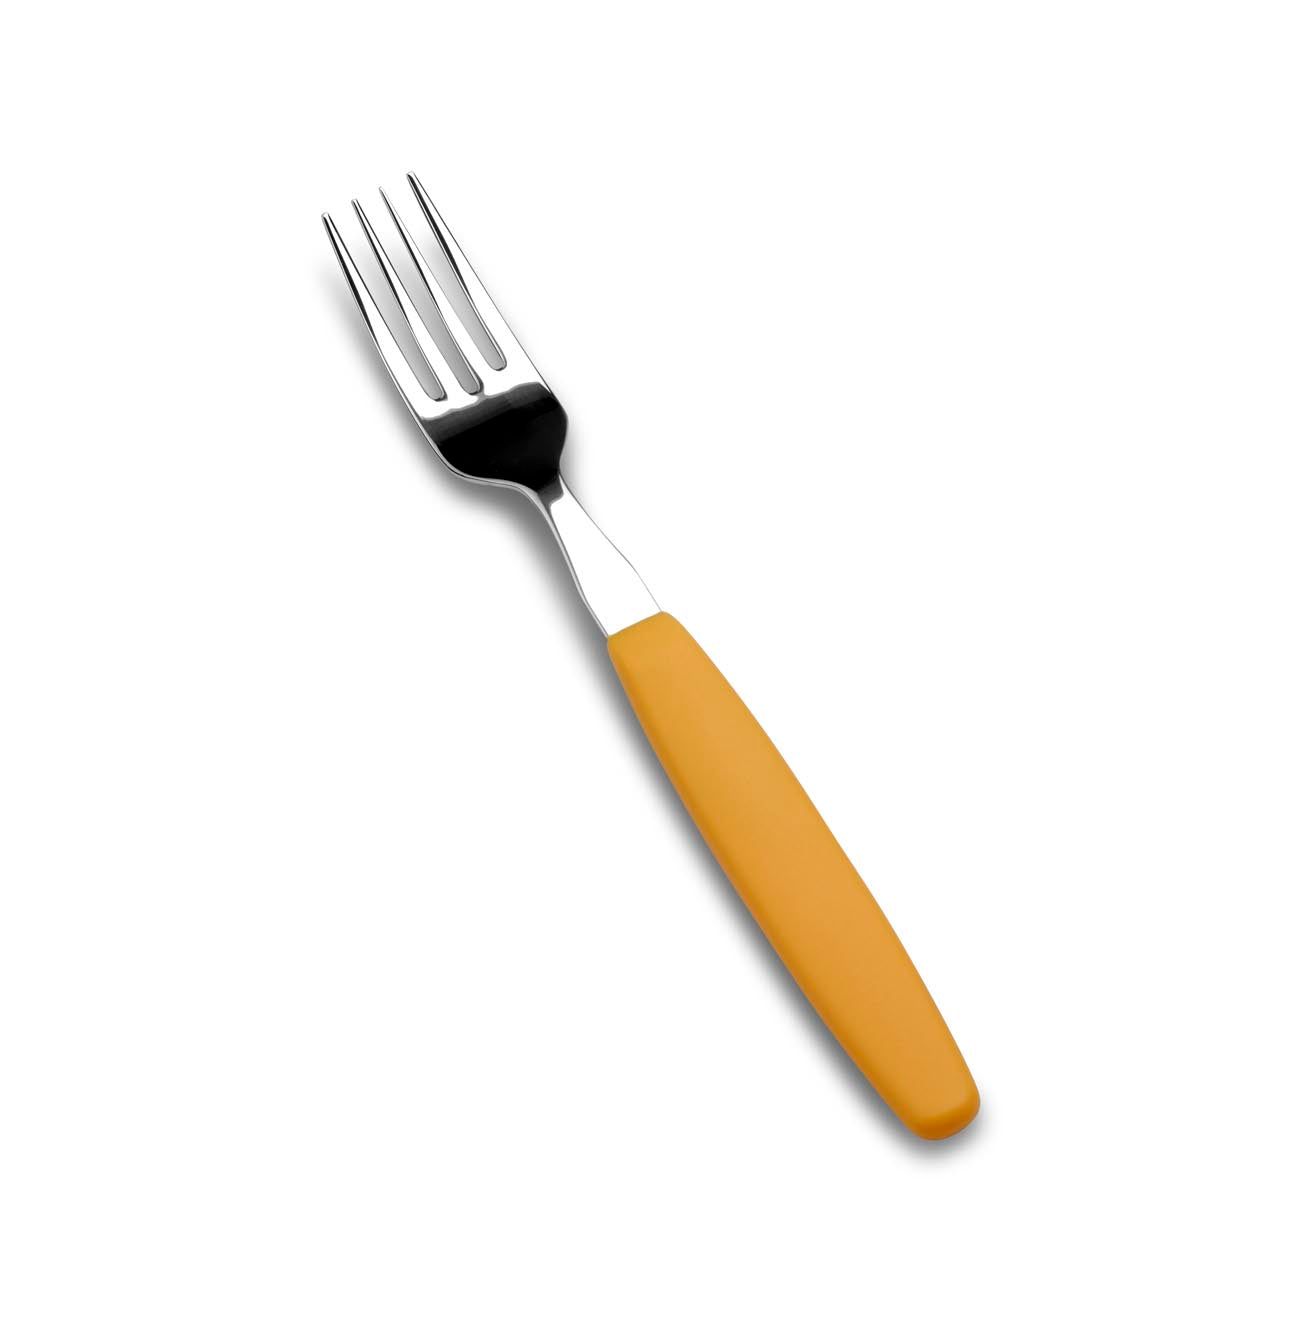 cutlery set by Camptools